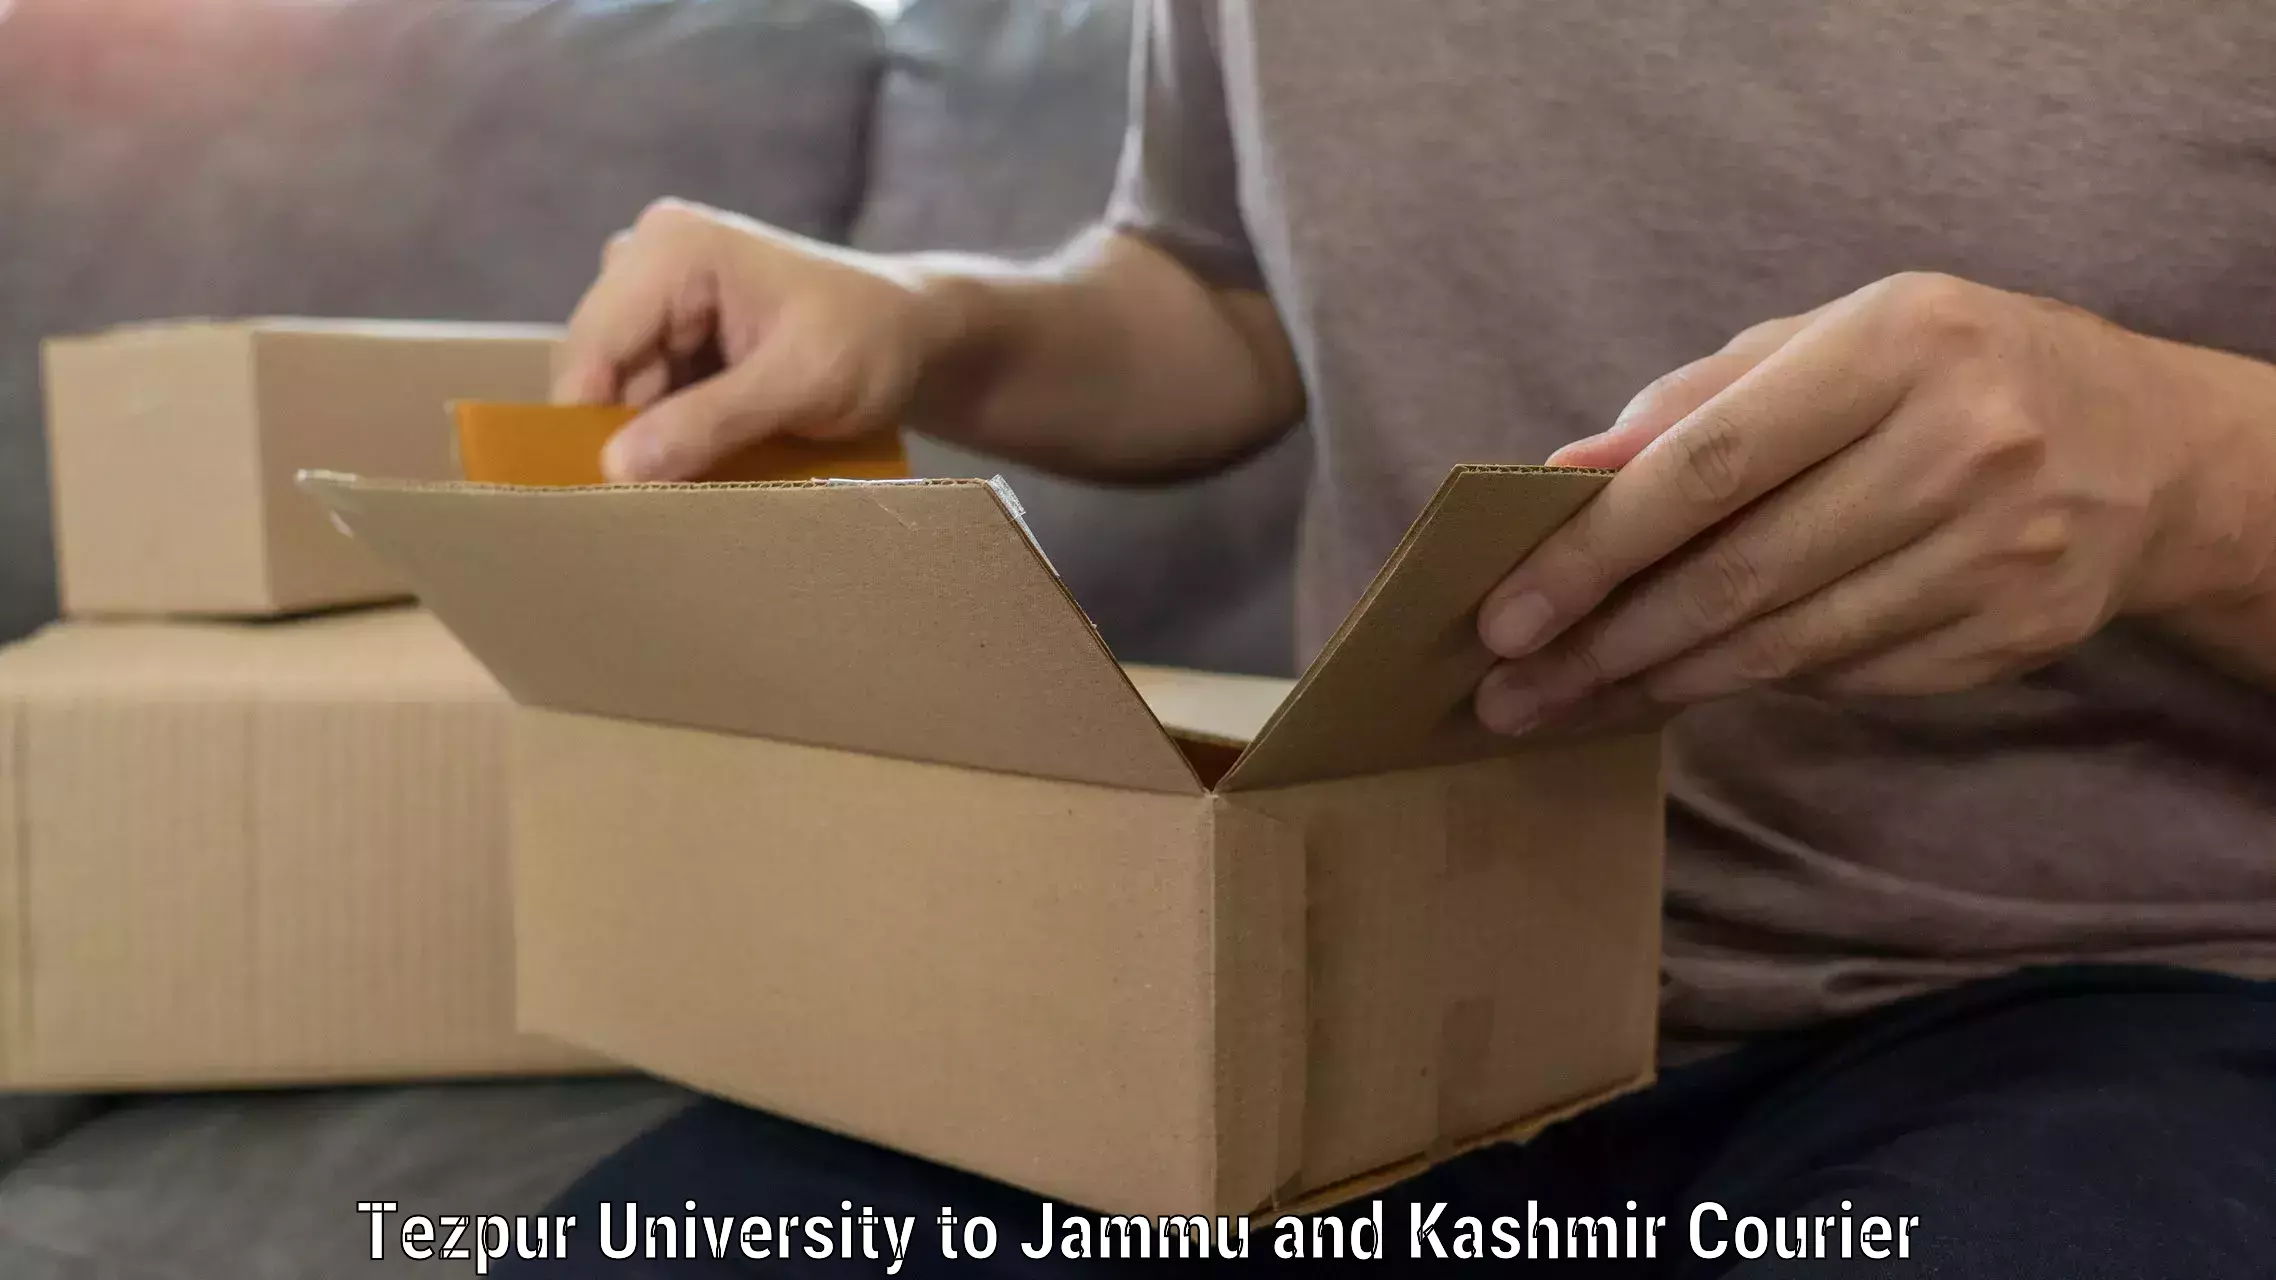 Quality furniture transport Tezpur University to University of Jammu